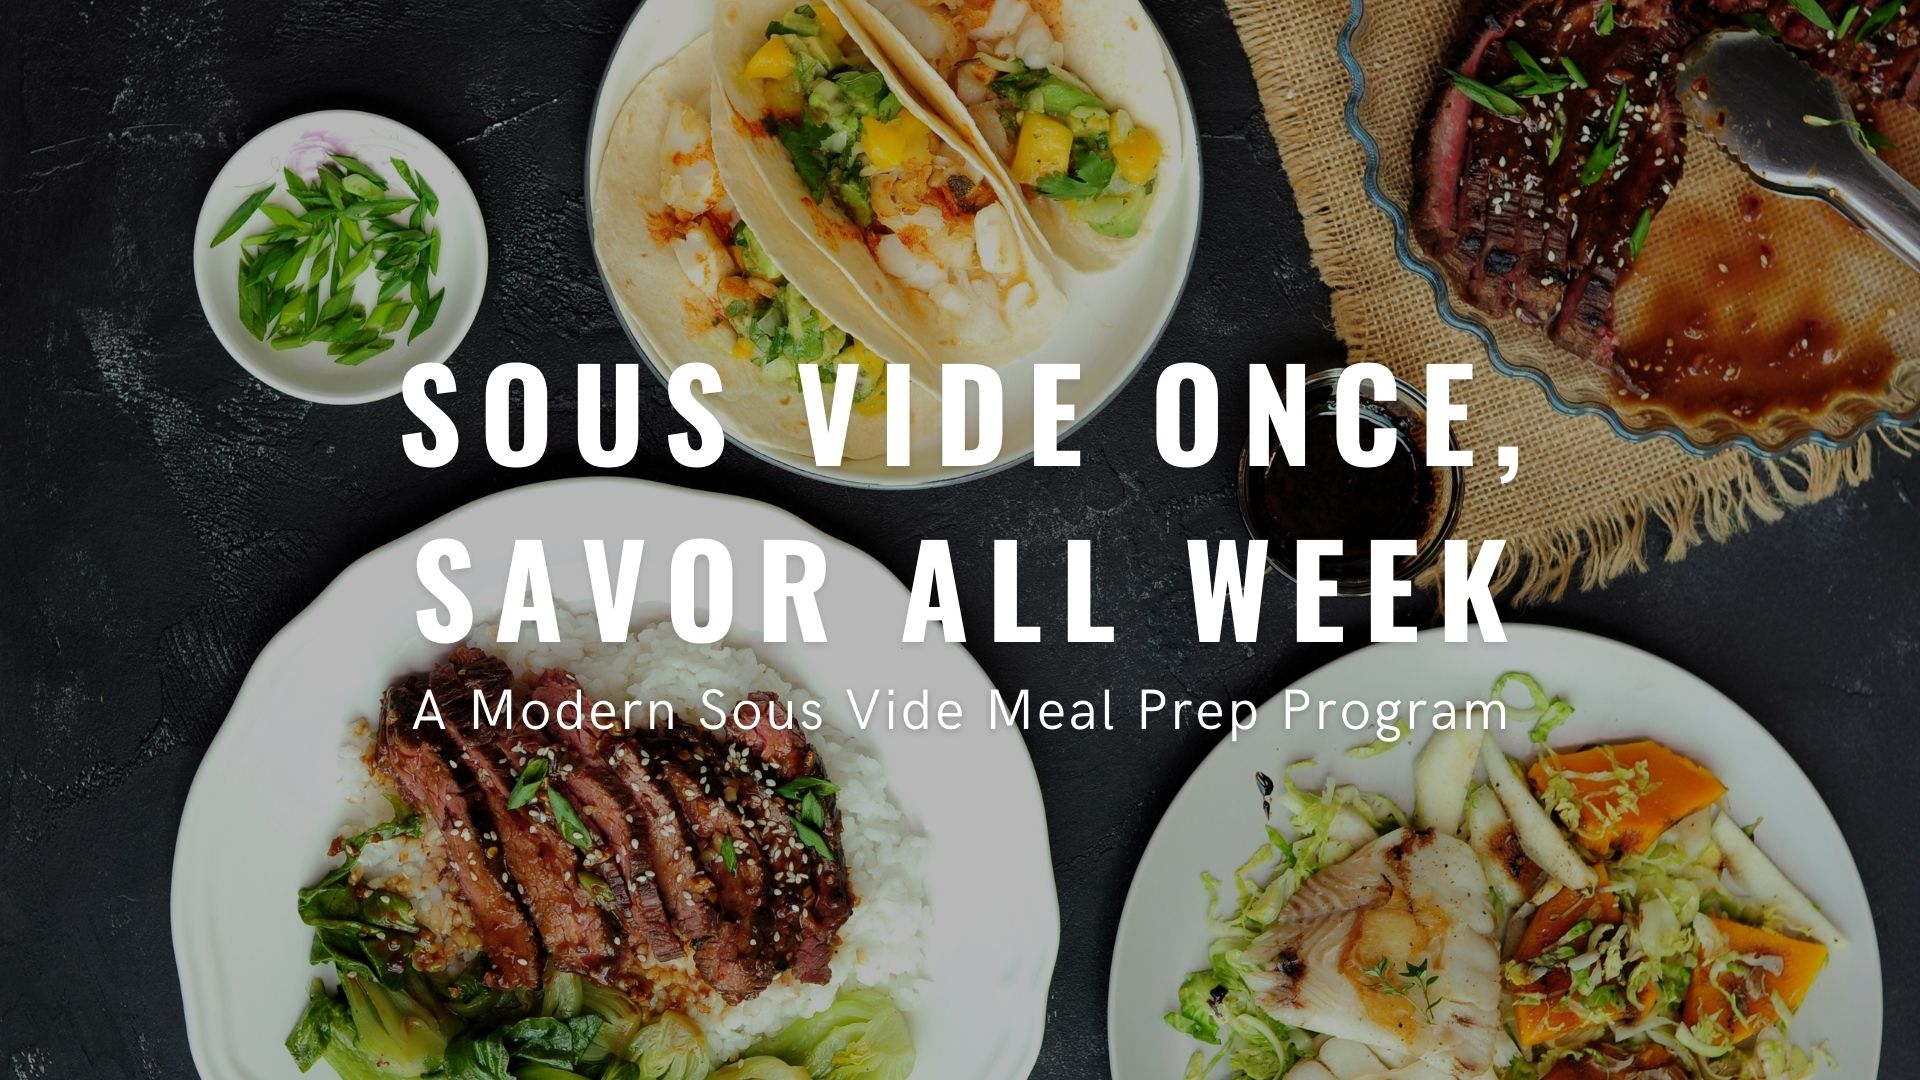 Sous Vide Once, Savor All Week meal plan program